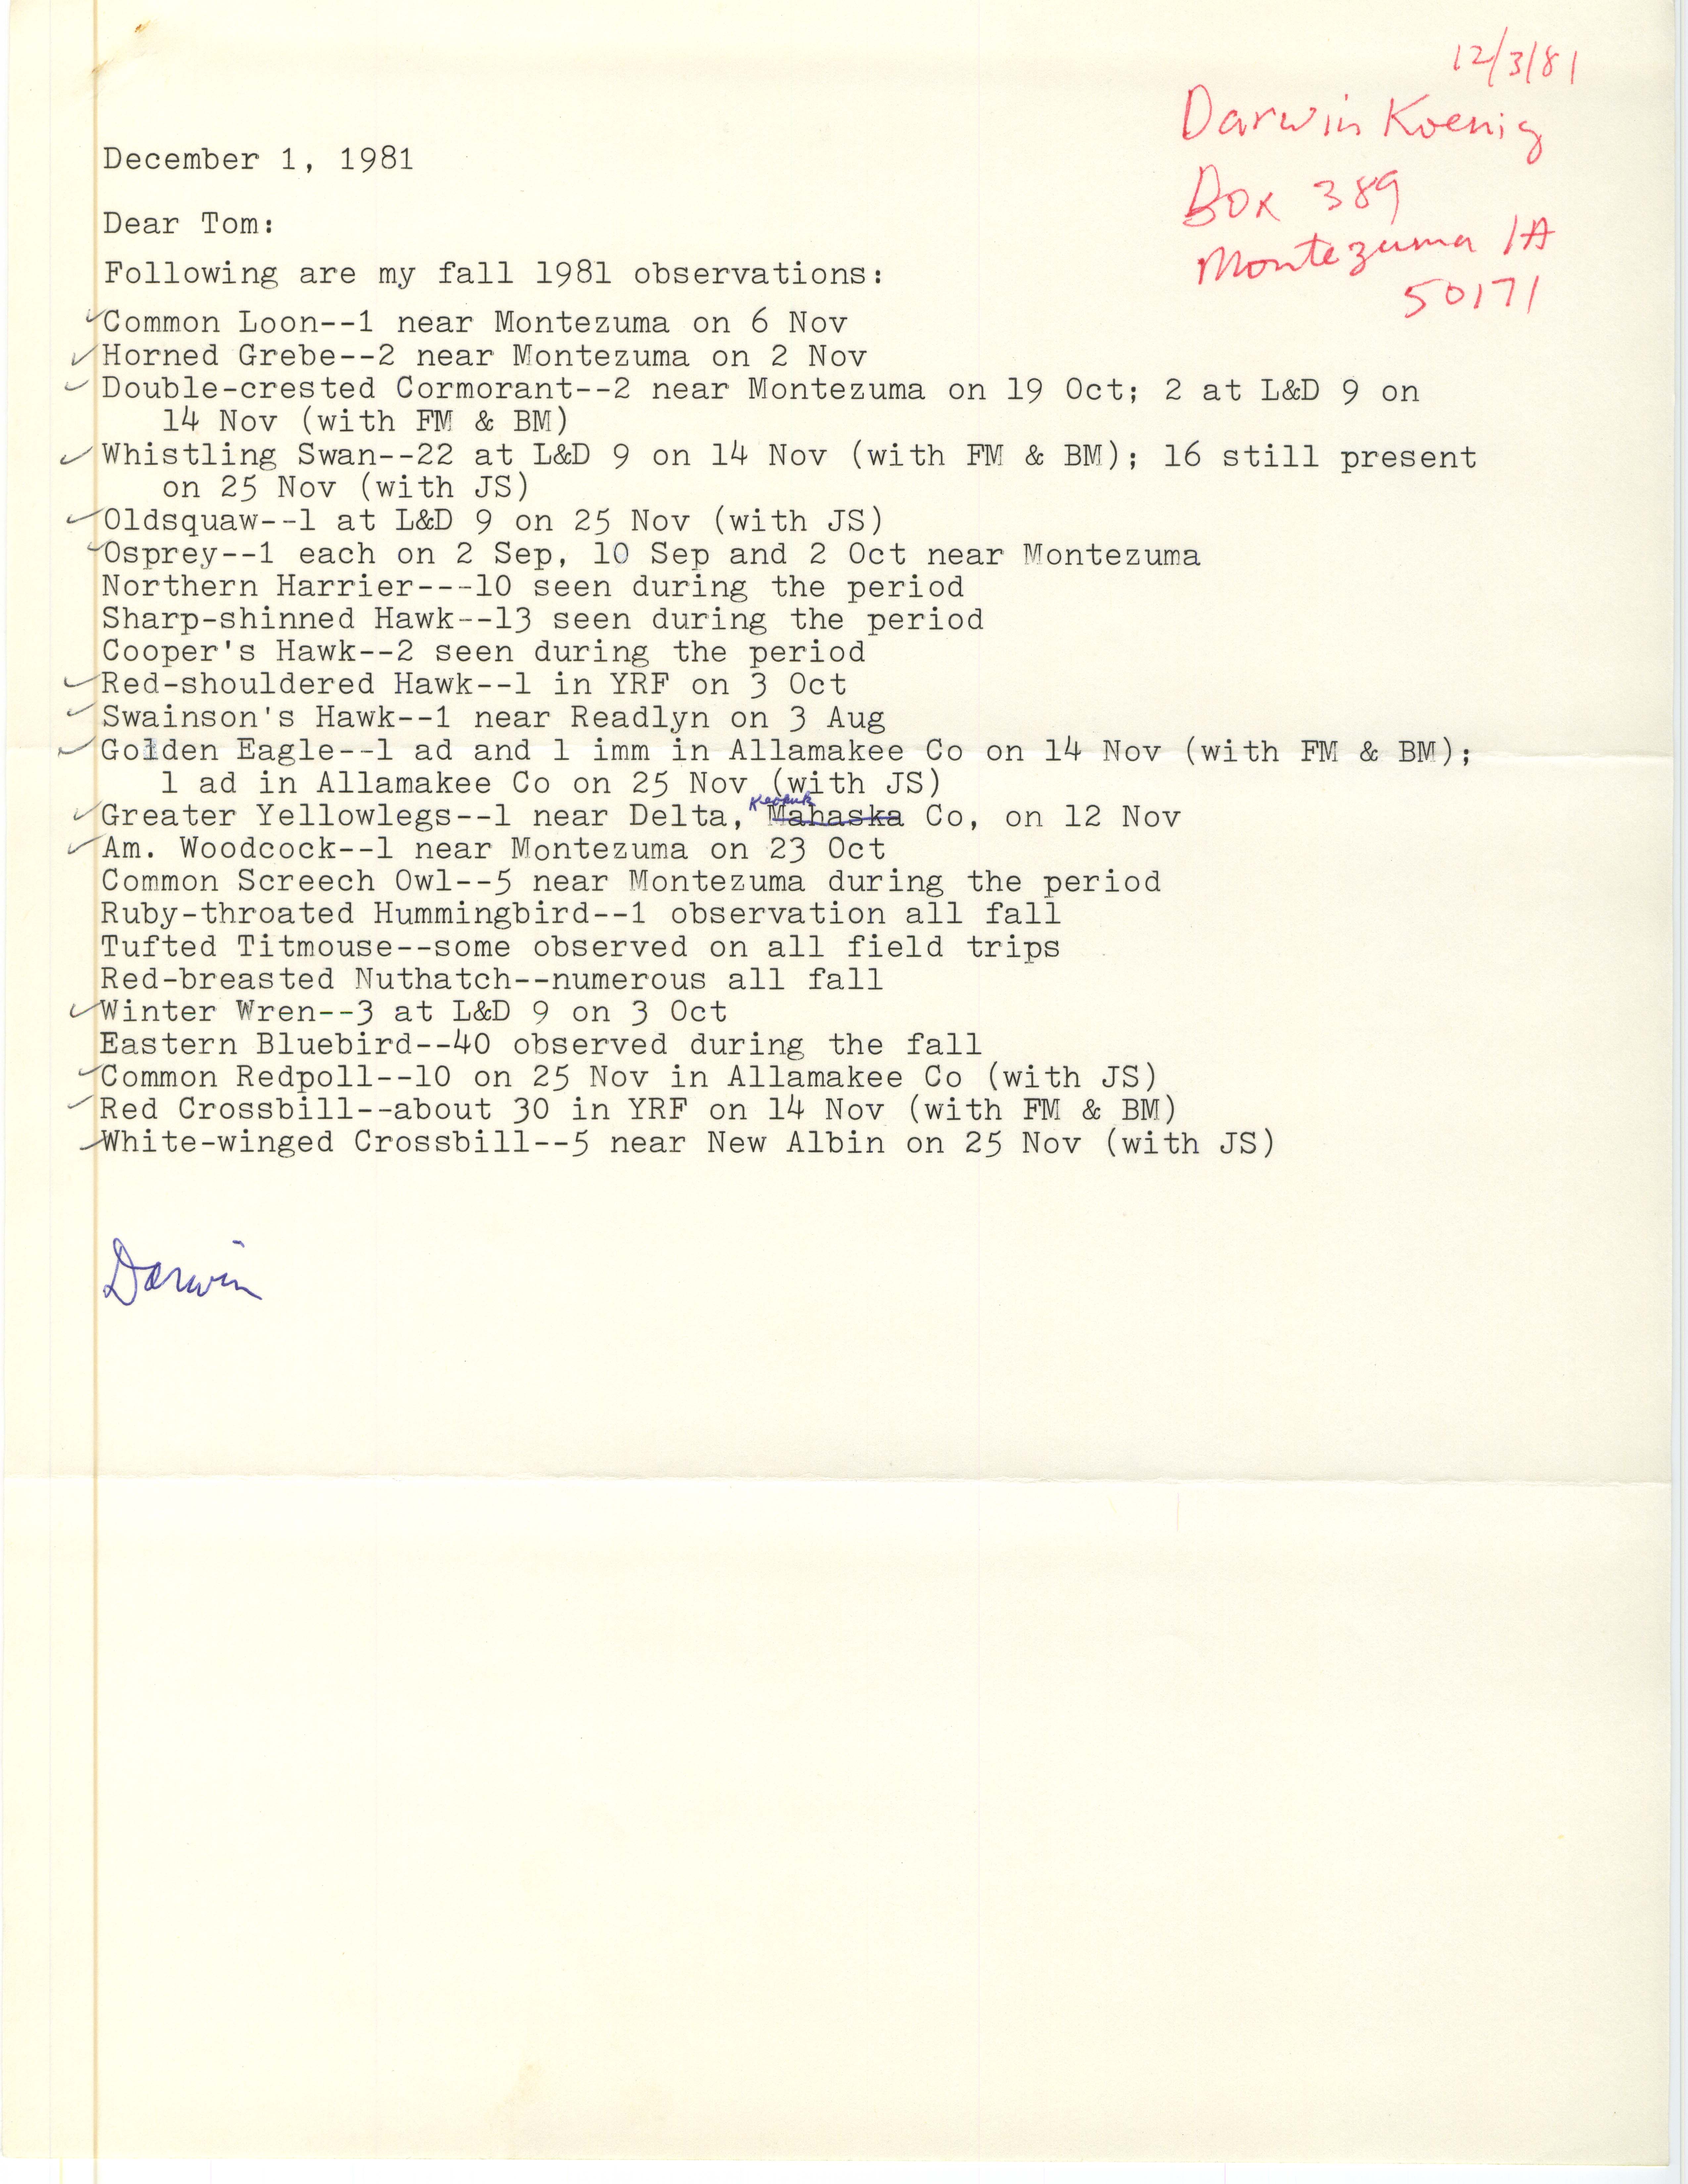 Darwin Koenig letter to Thomas H. Kent regarding field notes, December 1, 1981